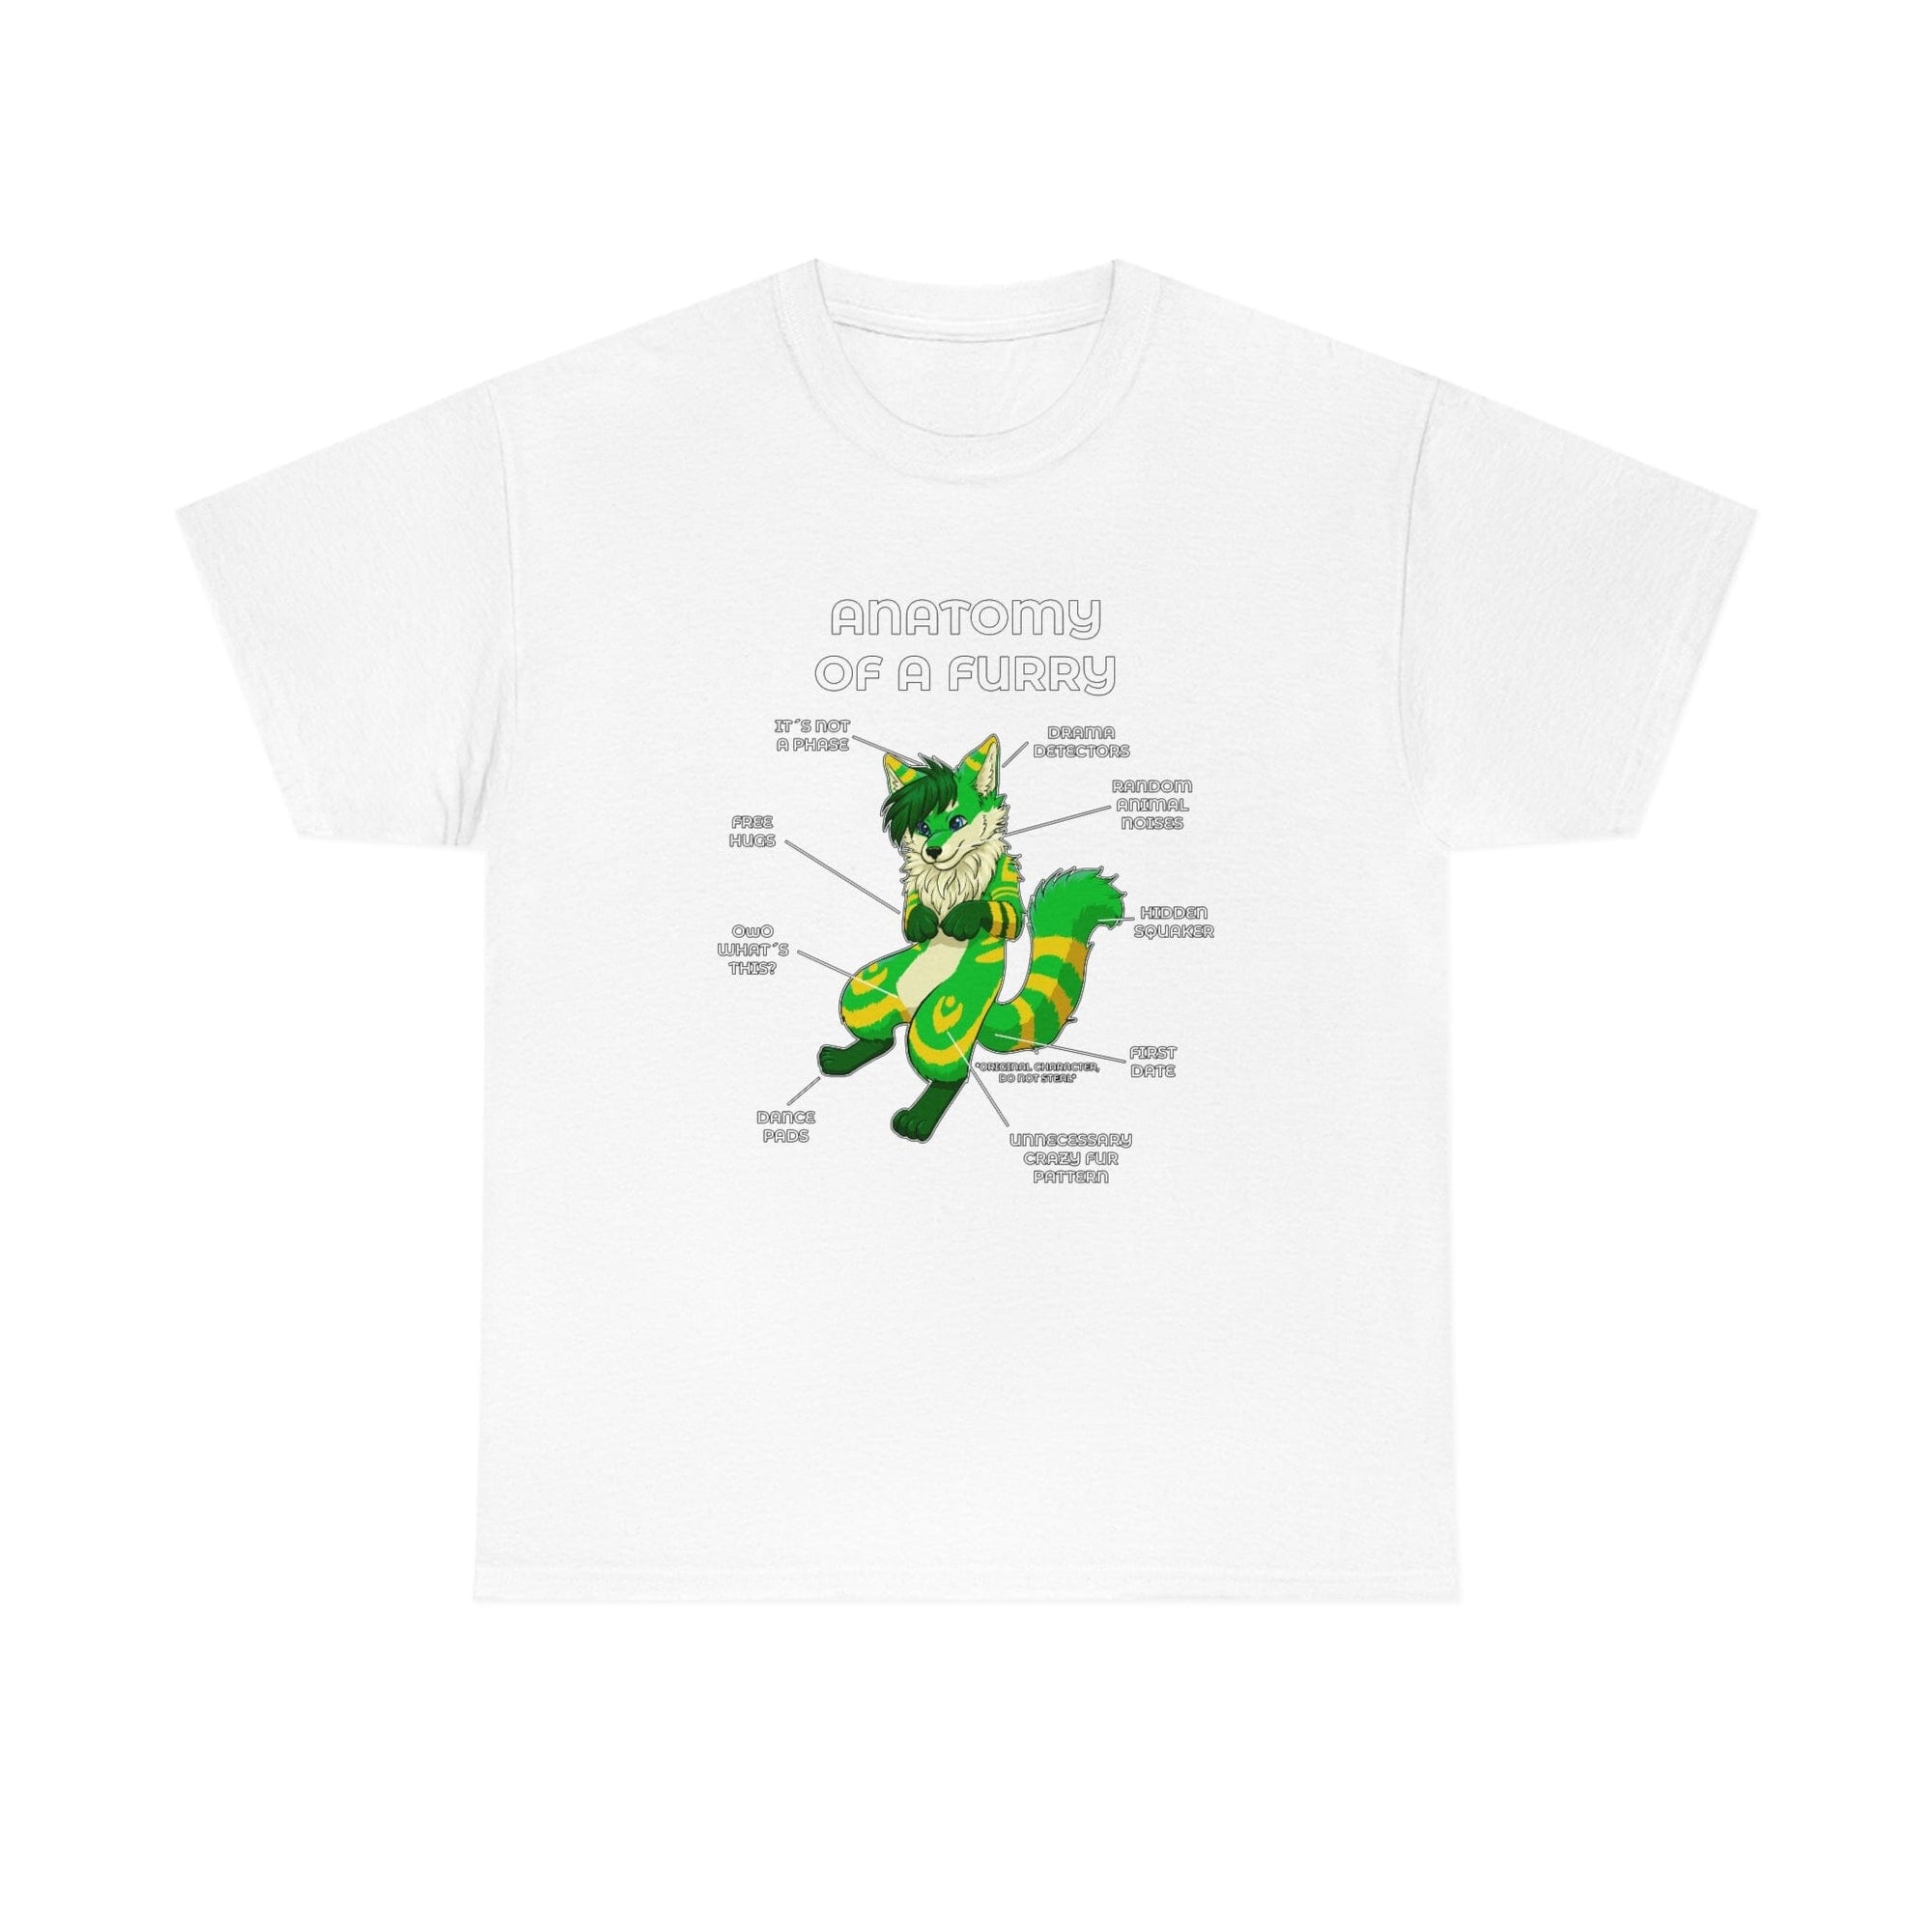 Furry Green and Yellow - T-Shirt T-Shirt Artworktee White S 